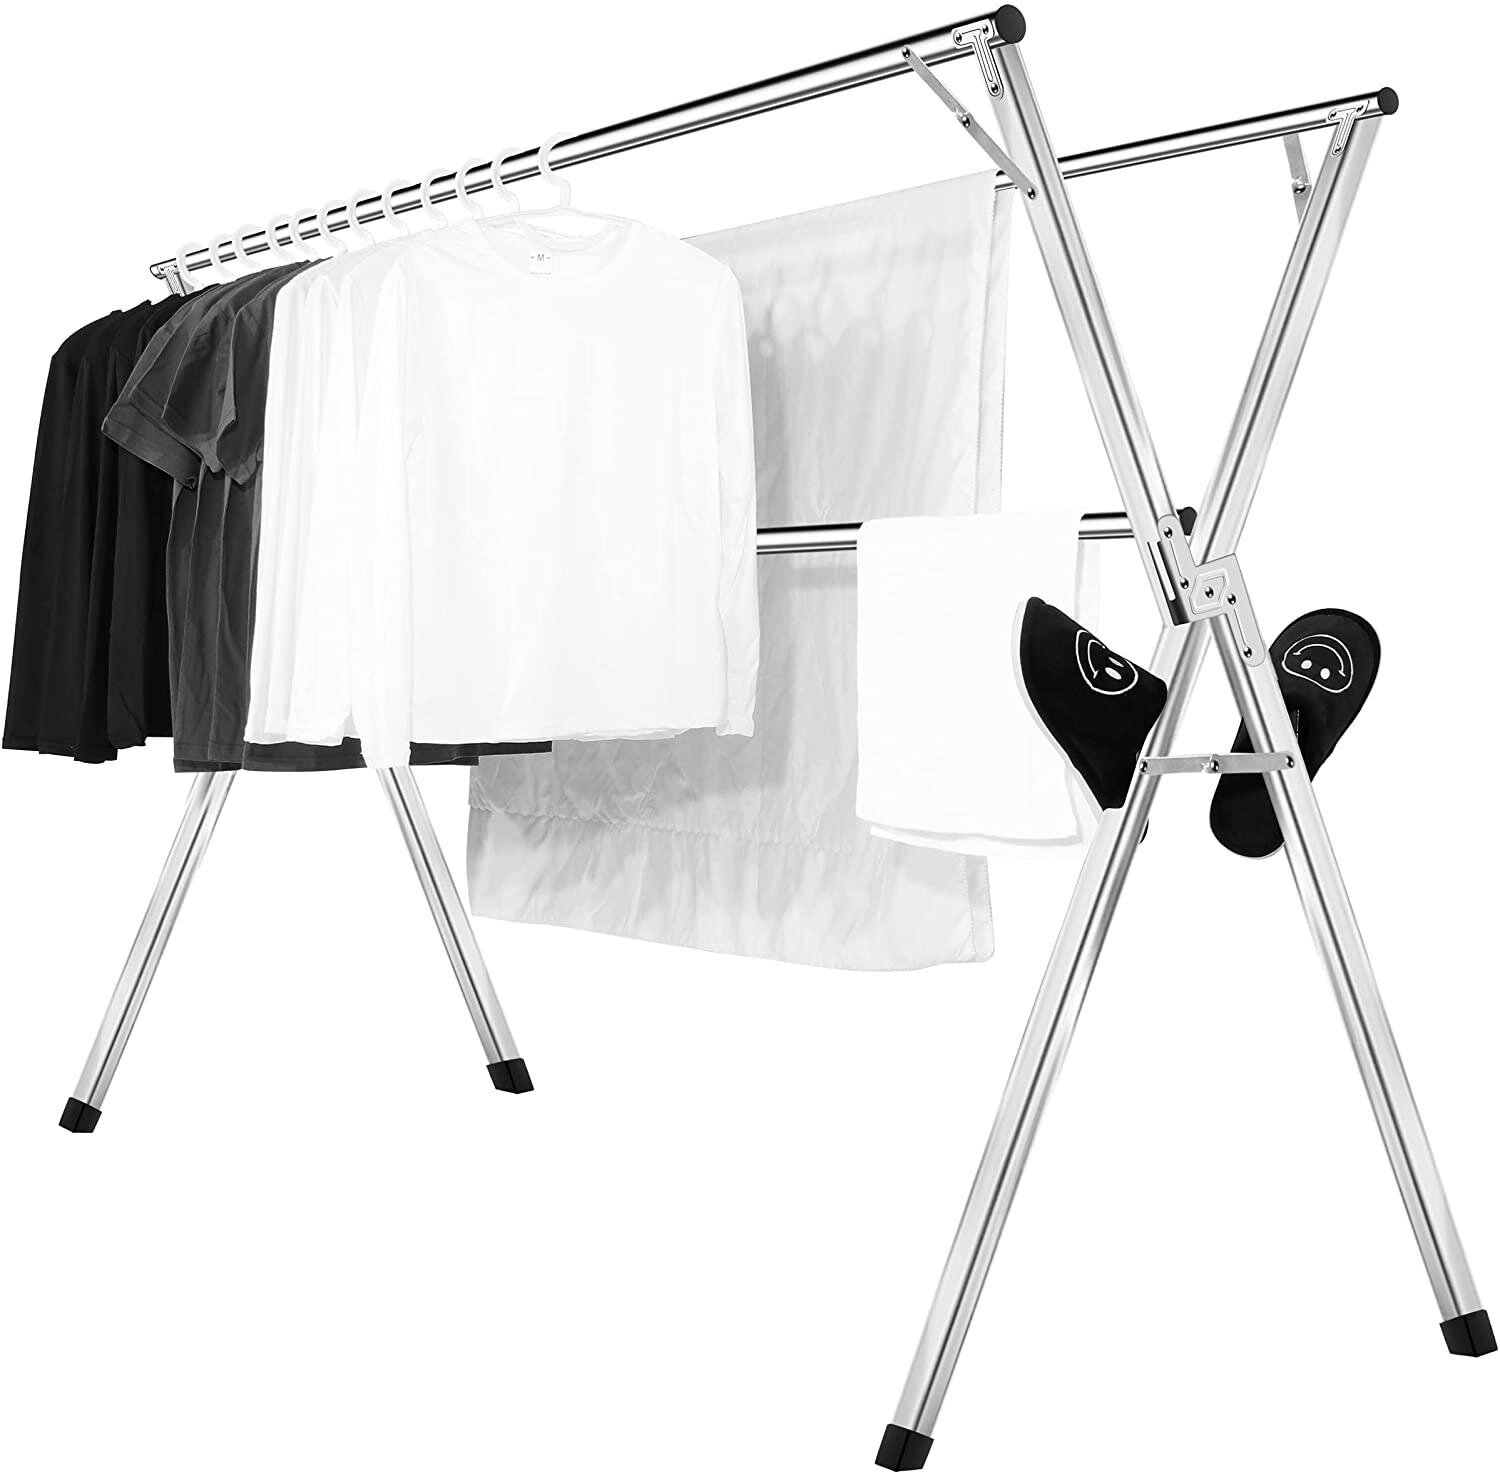 Clothes Drying Rack Wooden Laundry Hanger Indoor Outdoor Dryer Folding Organizer